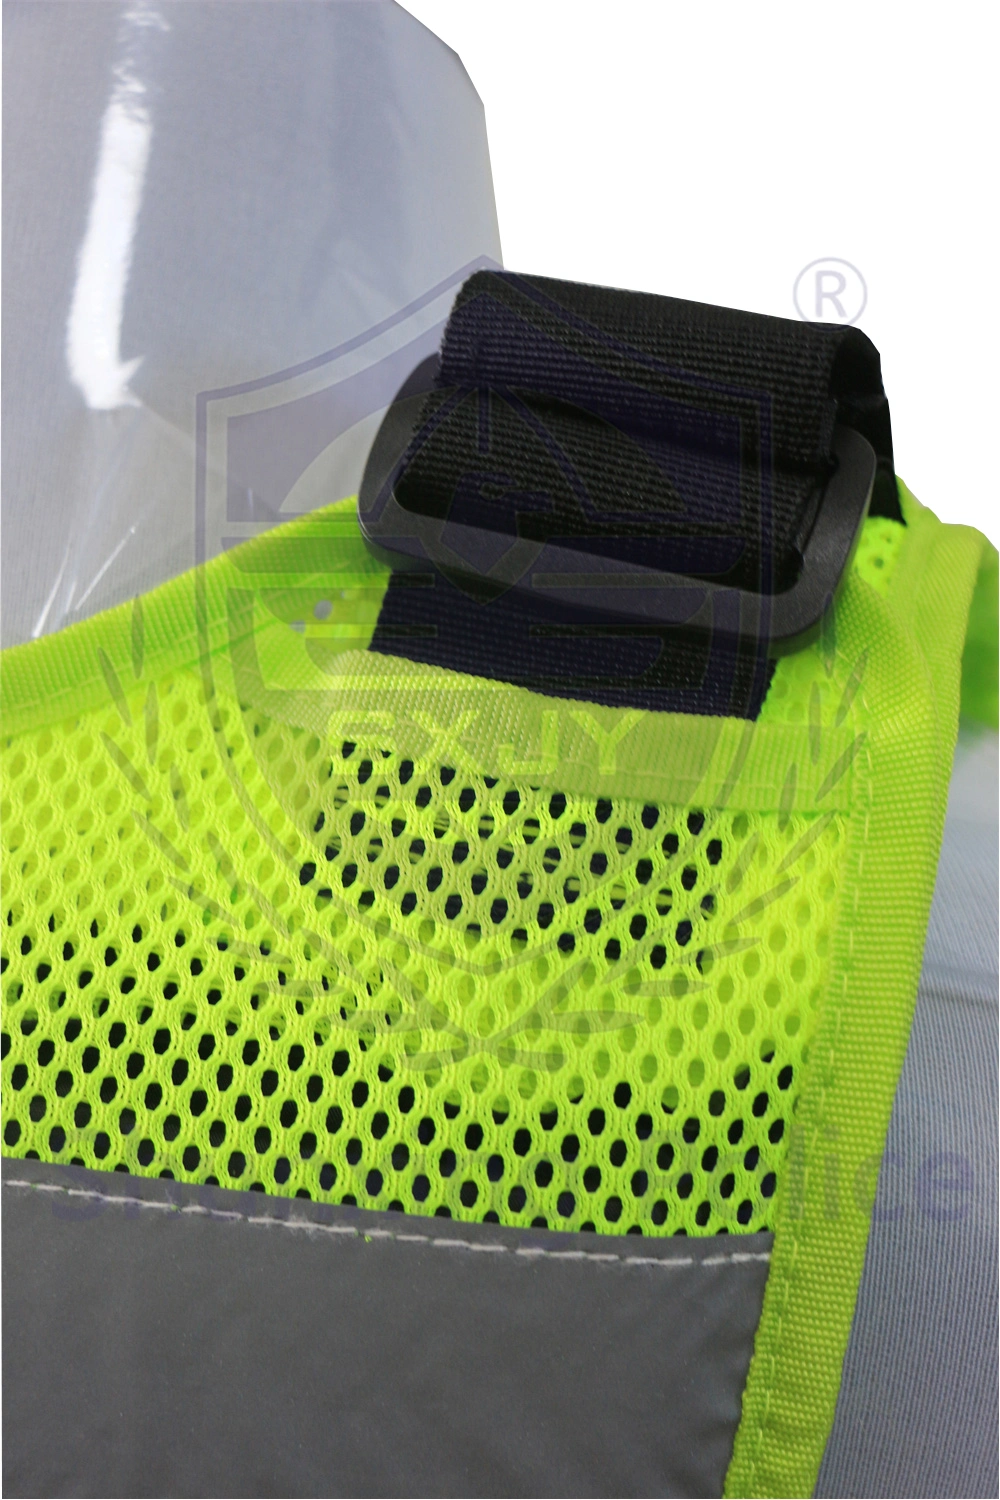 Tactical Vest Reflective Vesttactical Traffic Safety Jacket Reflective Tank Top